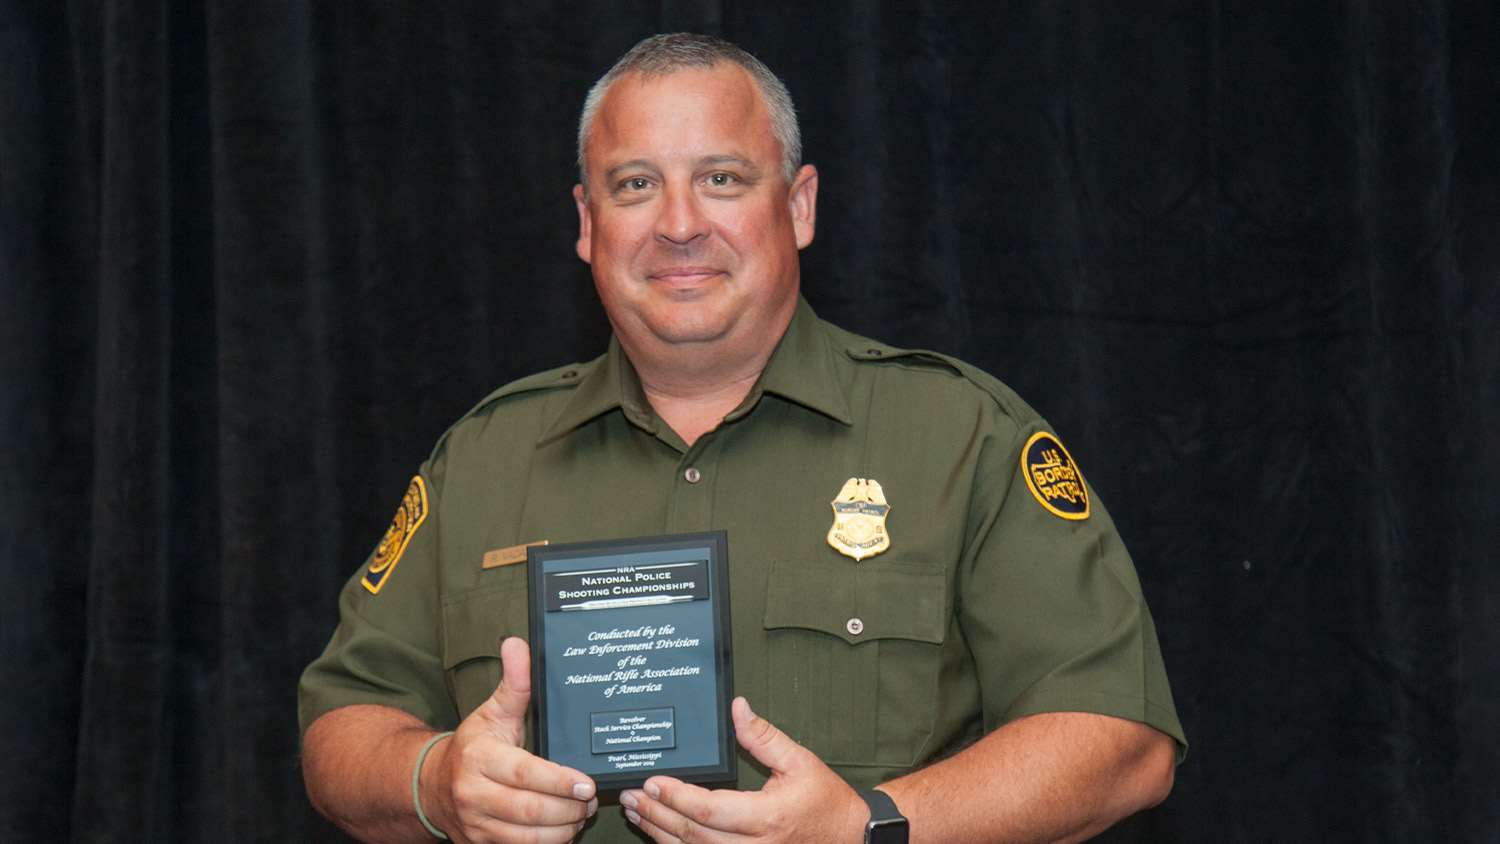 Robert Vadasz, U.S. Border Patrol and 2019 NPSC Champion